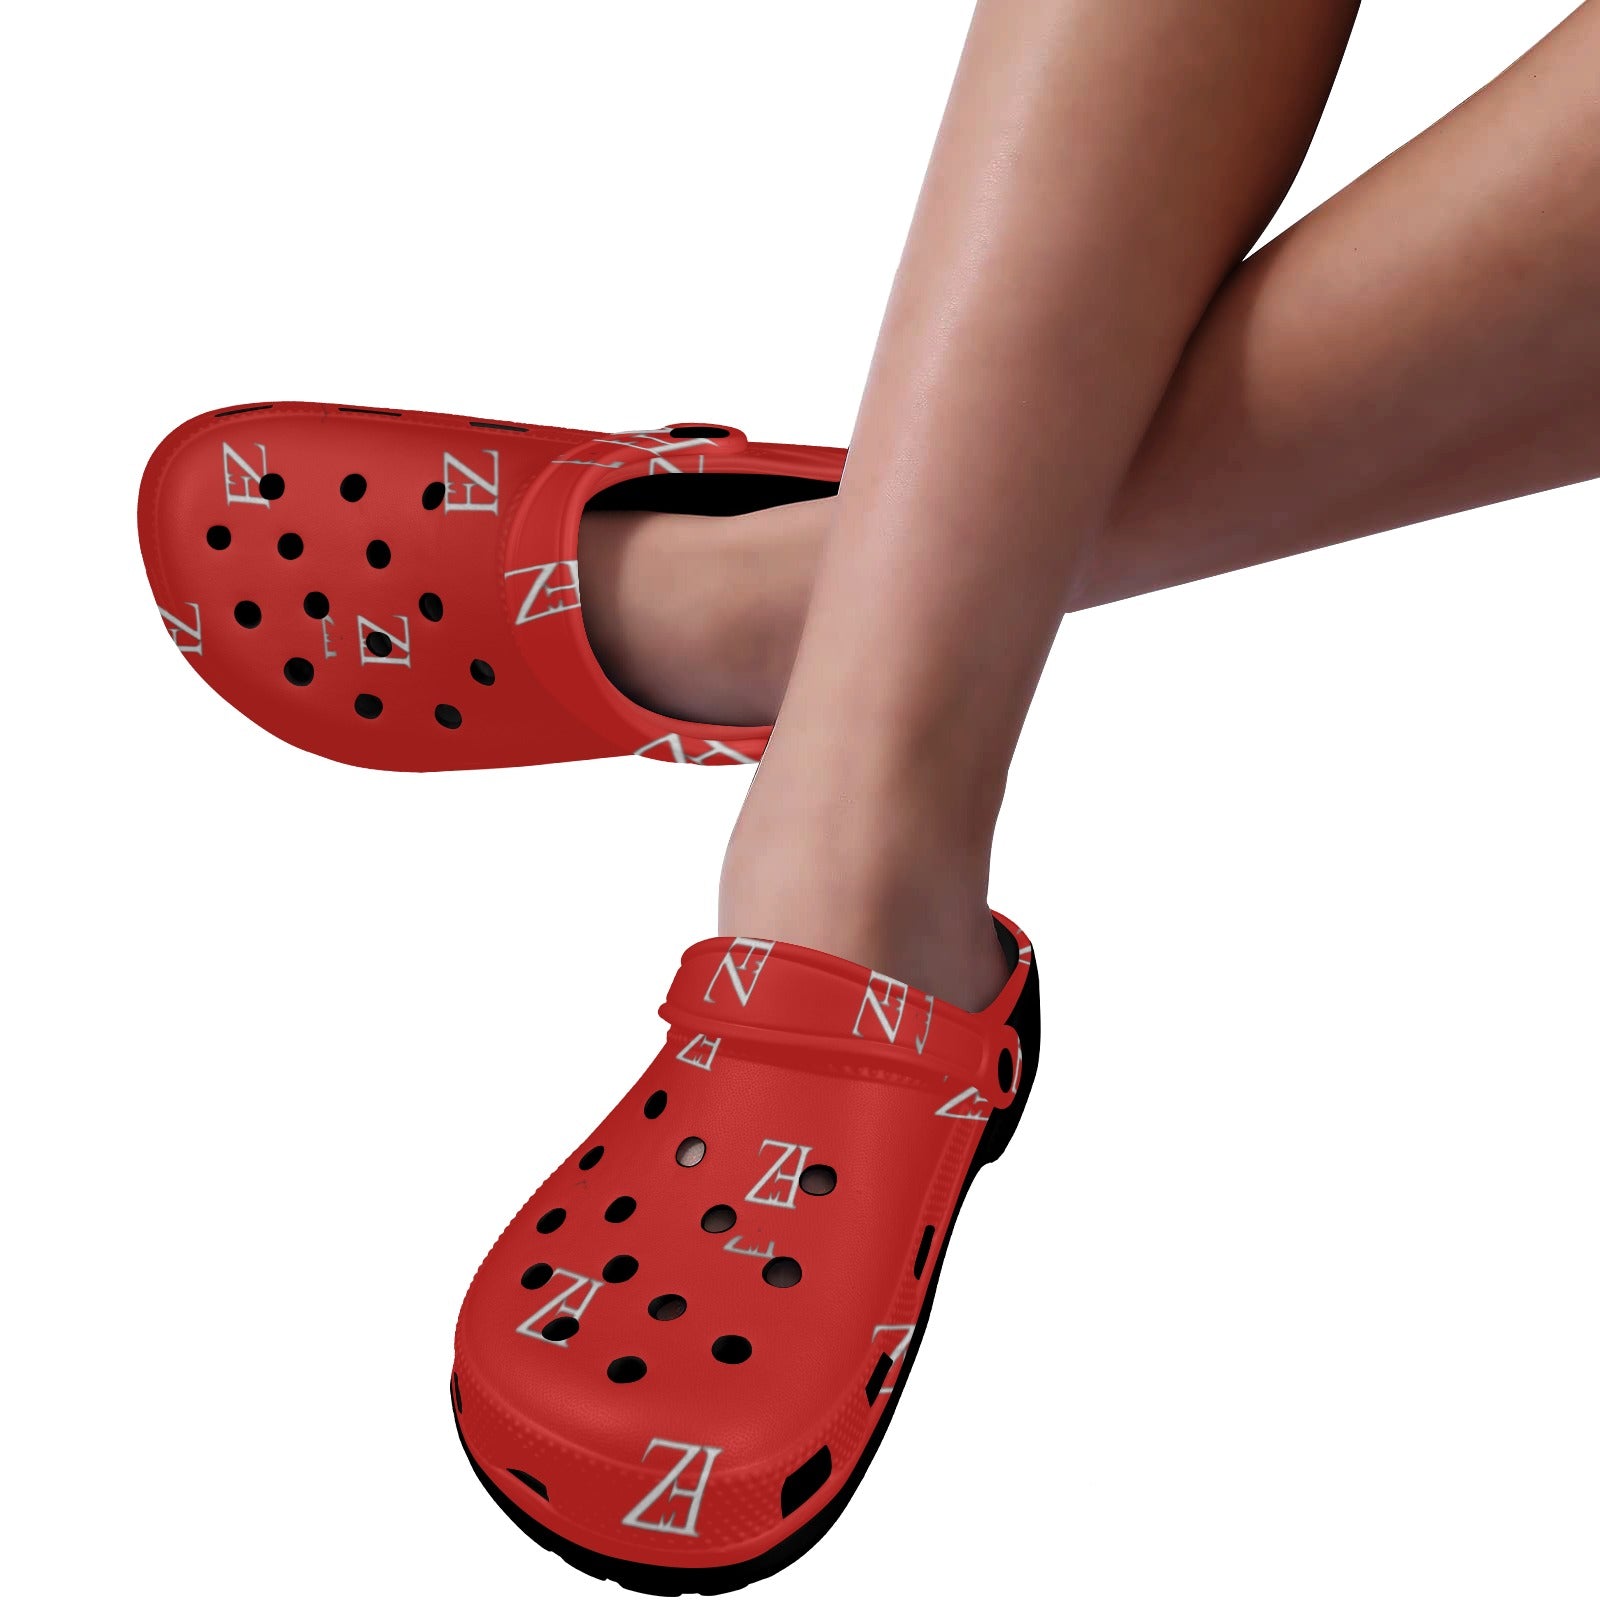 fz unisex sandals - red/black custom print adults clogs